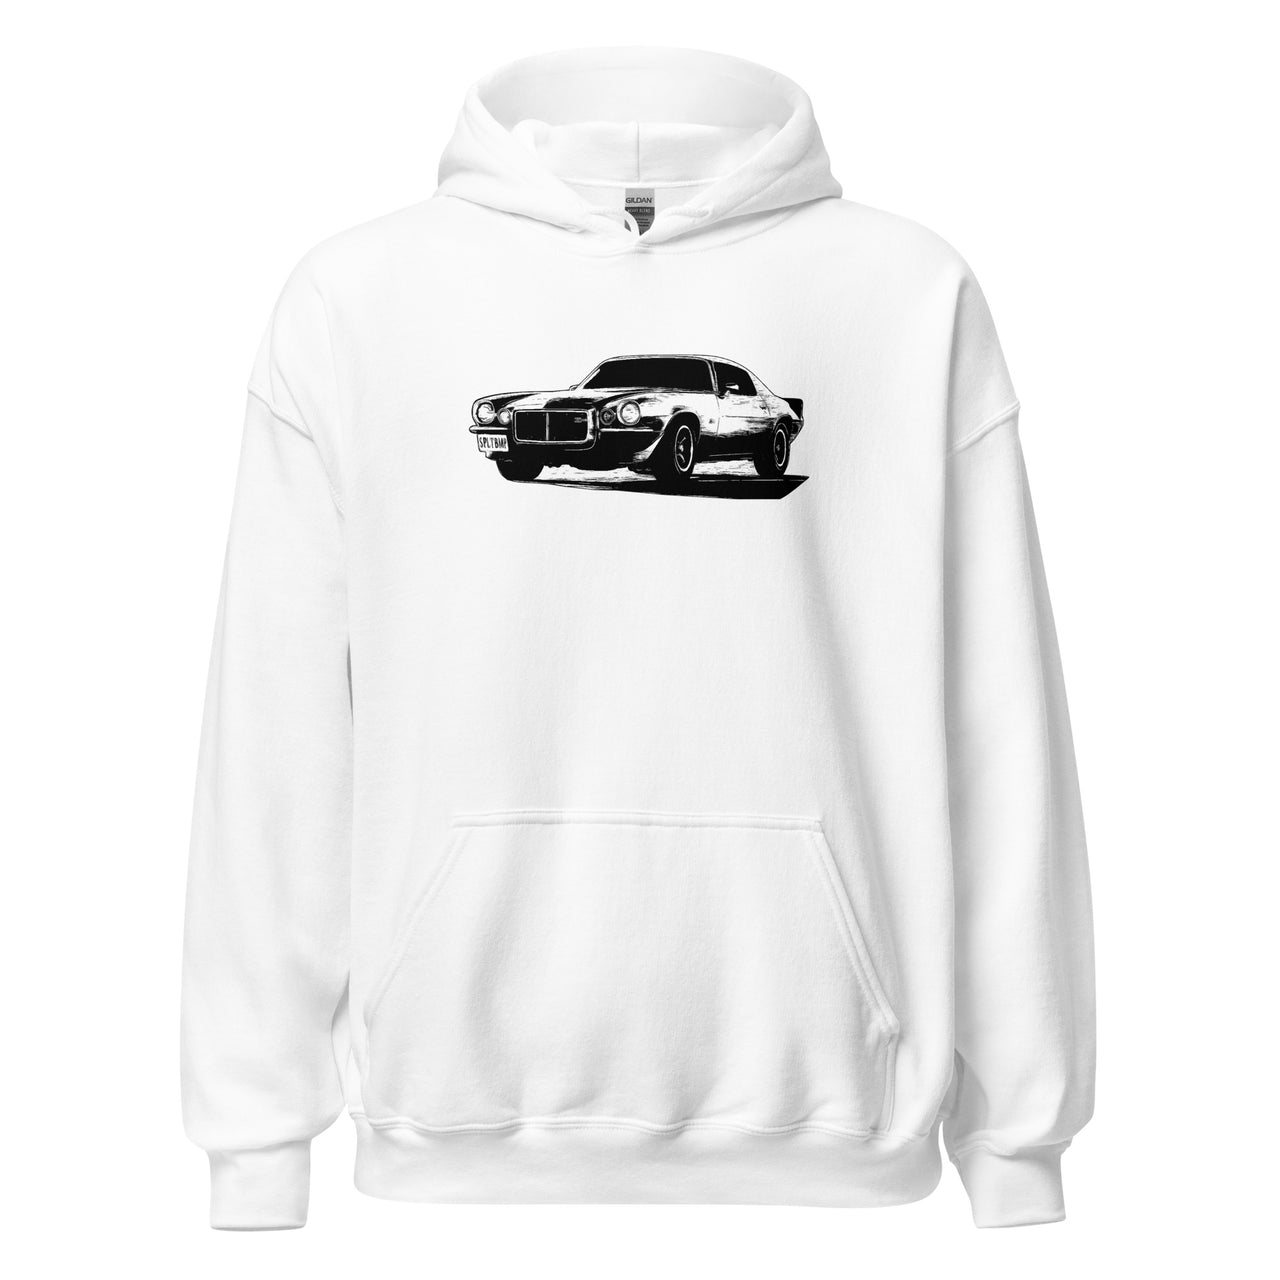 73 camaro hoodie in white